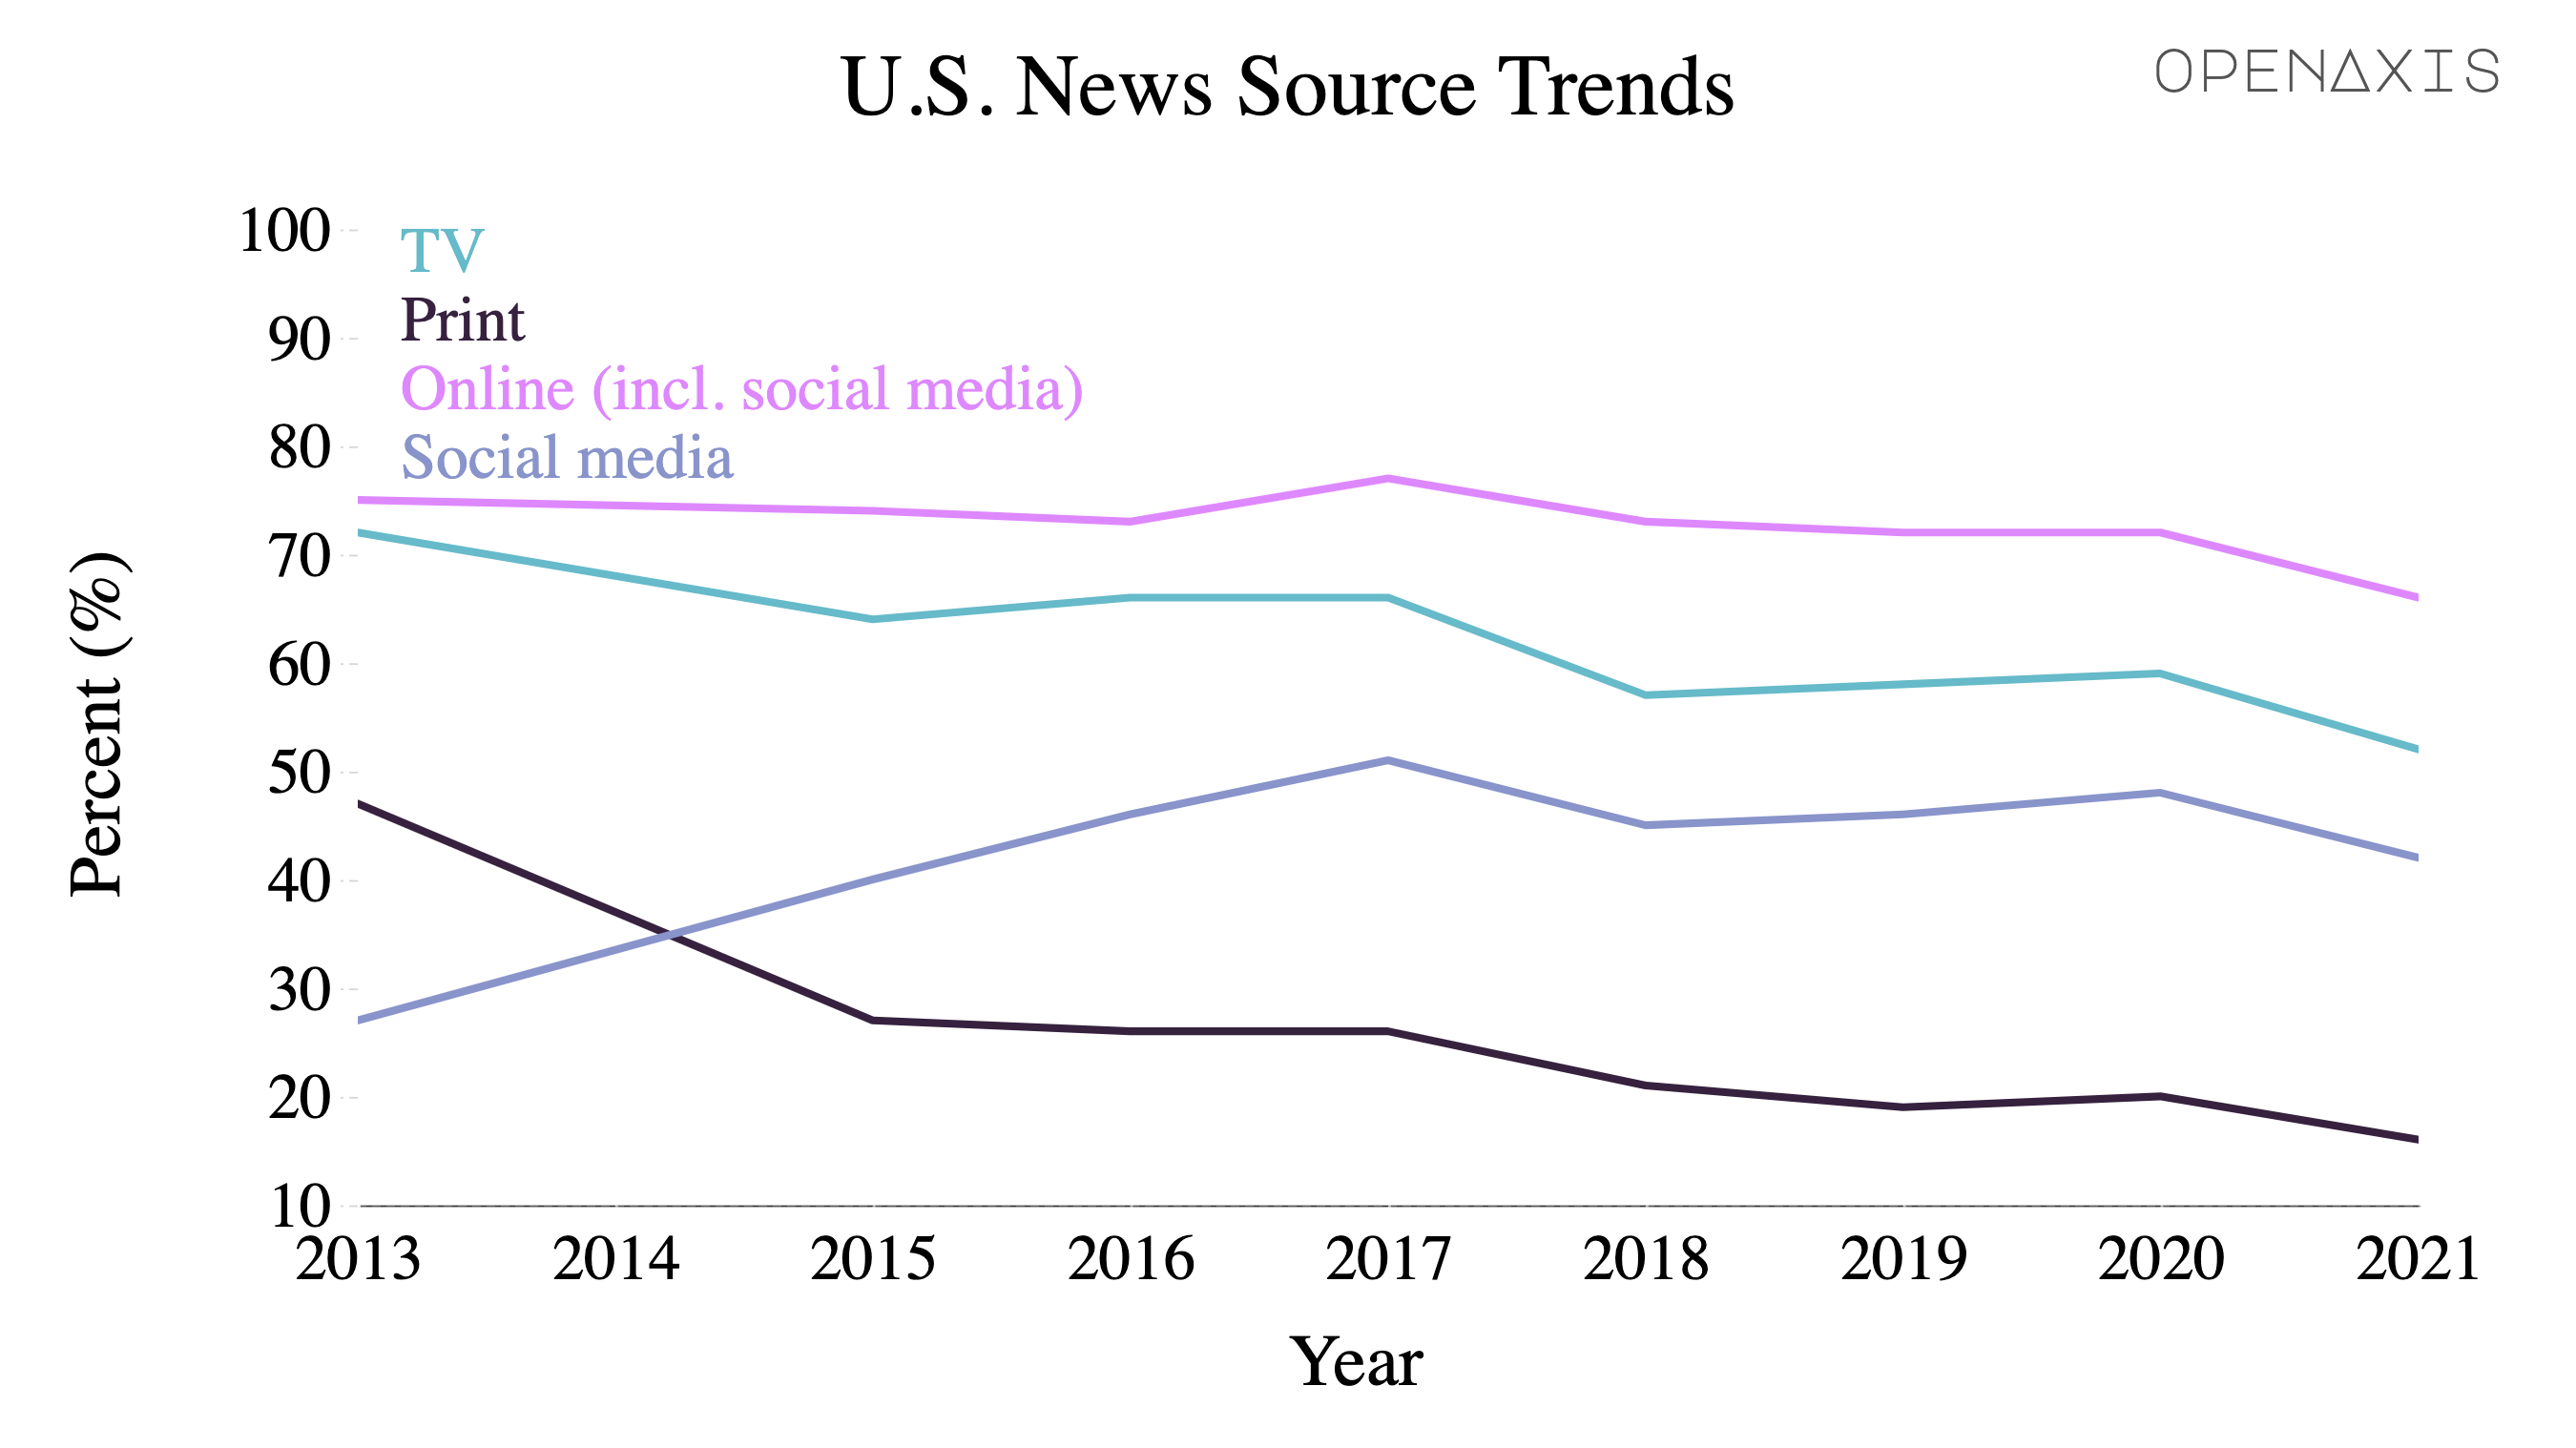 "U.S. News Source Trends "